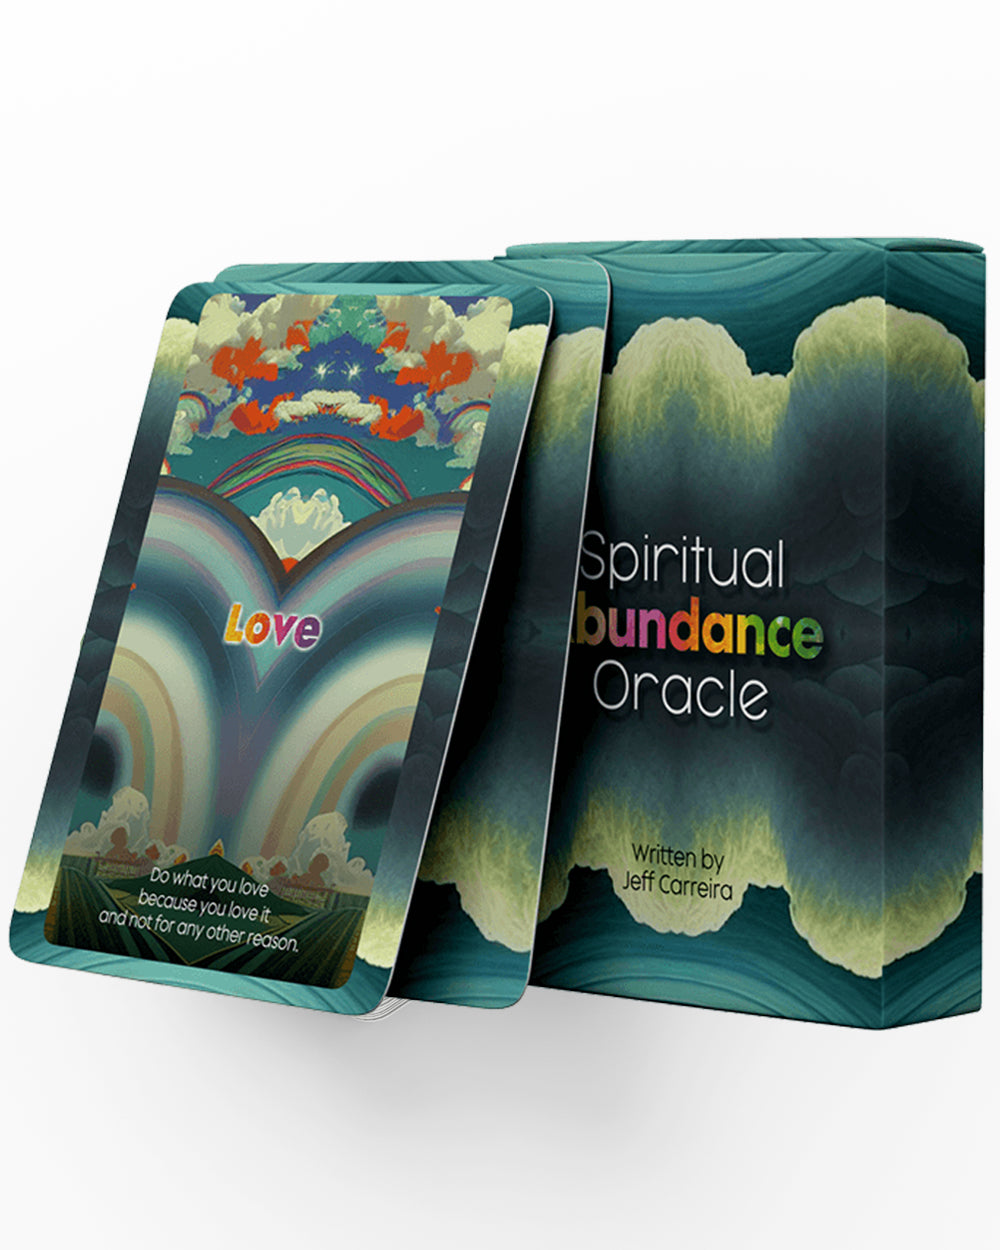 The Spiritual Abundance Oracle